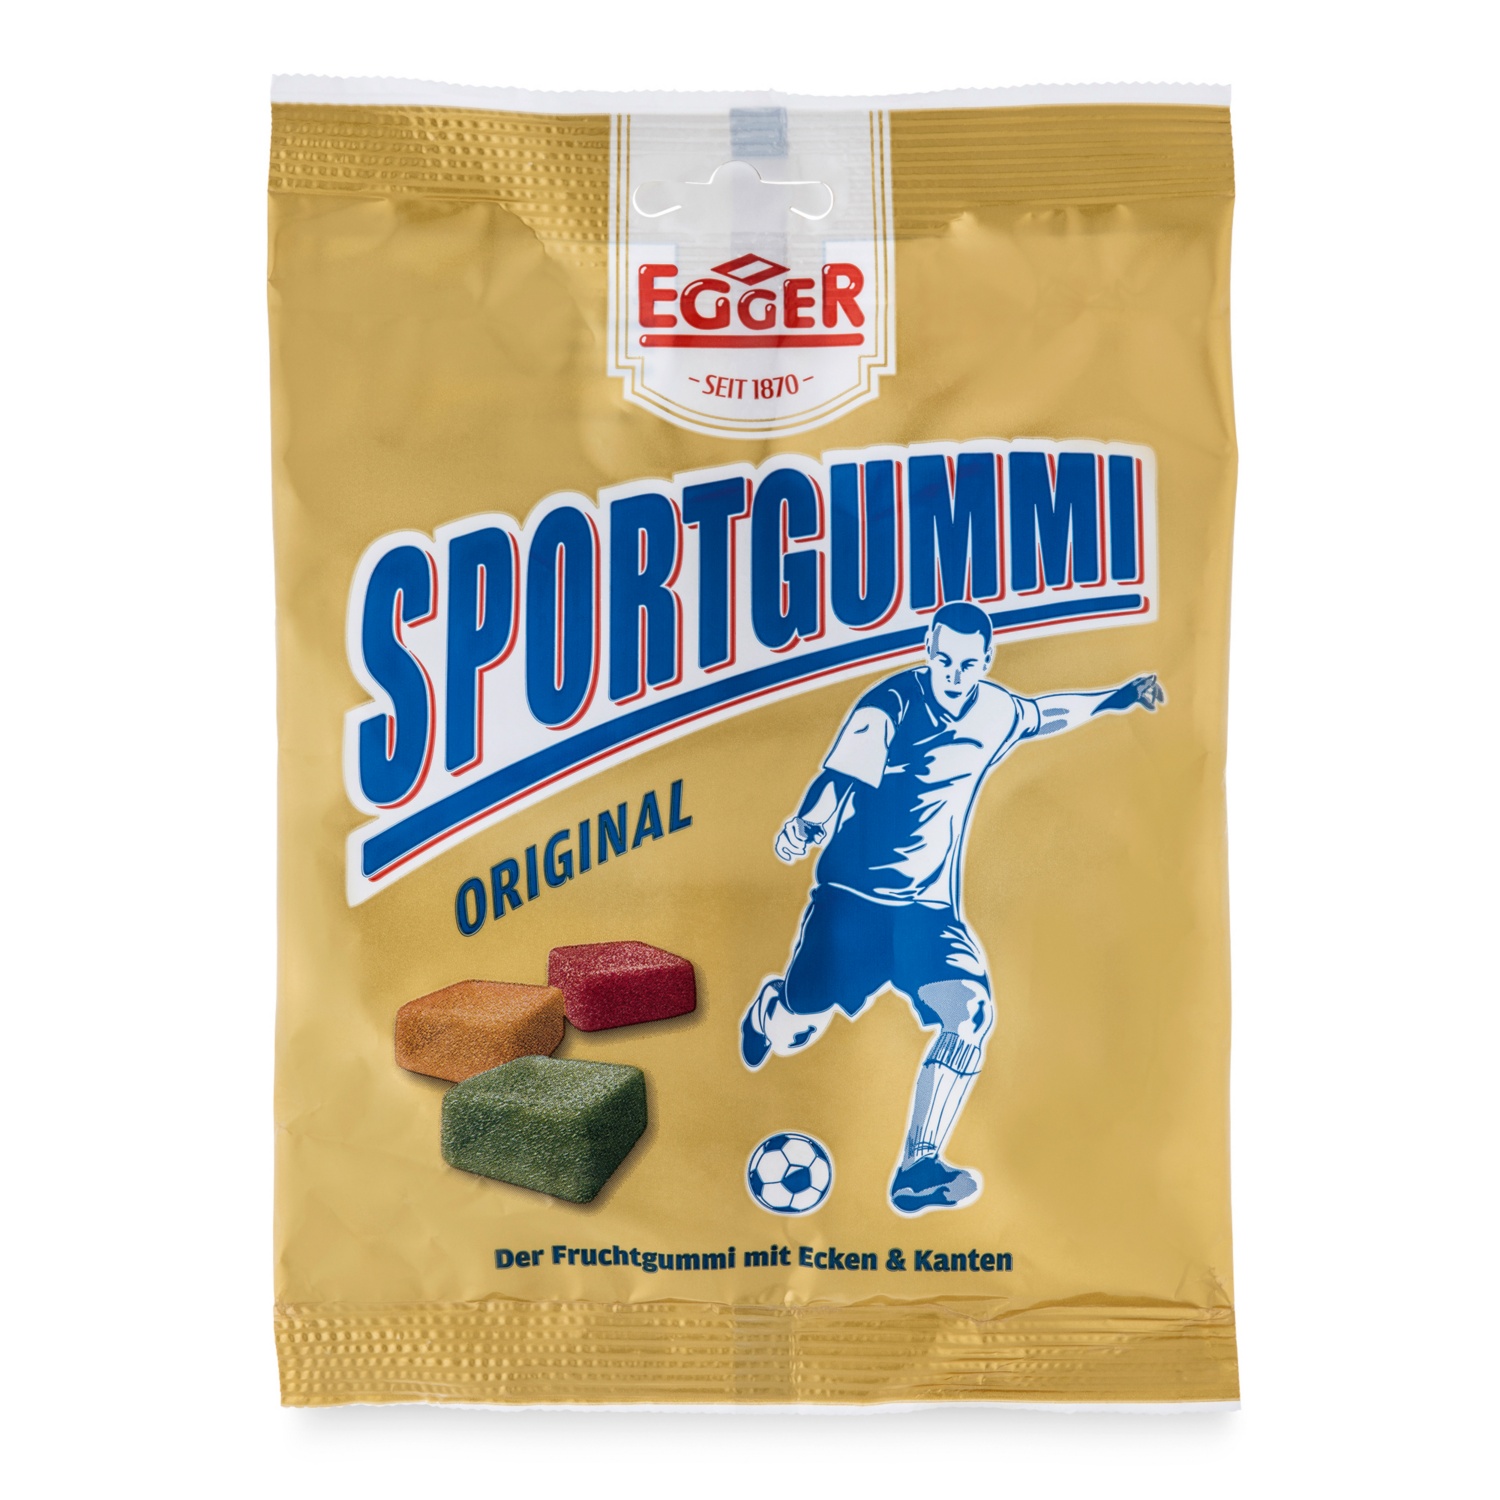 EGGER Sportgummi, Classic